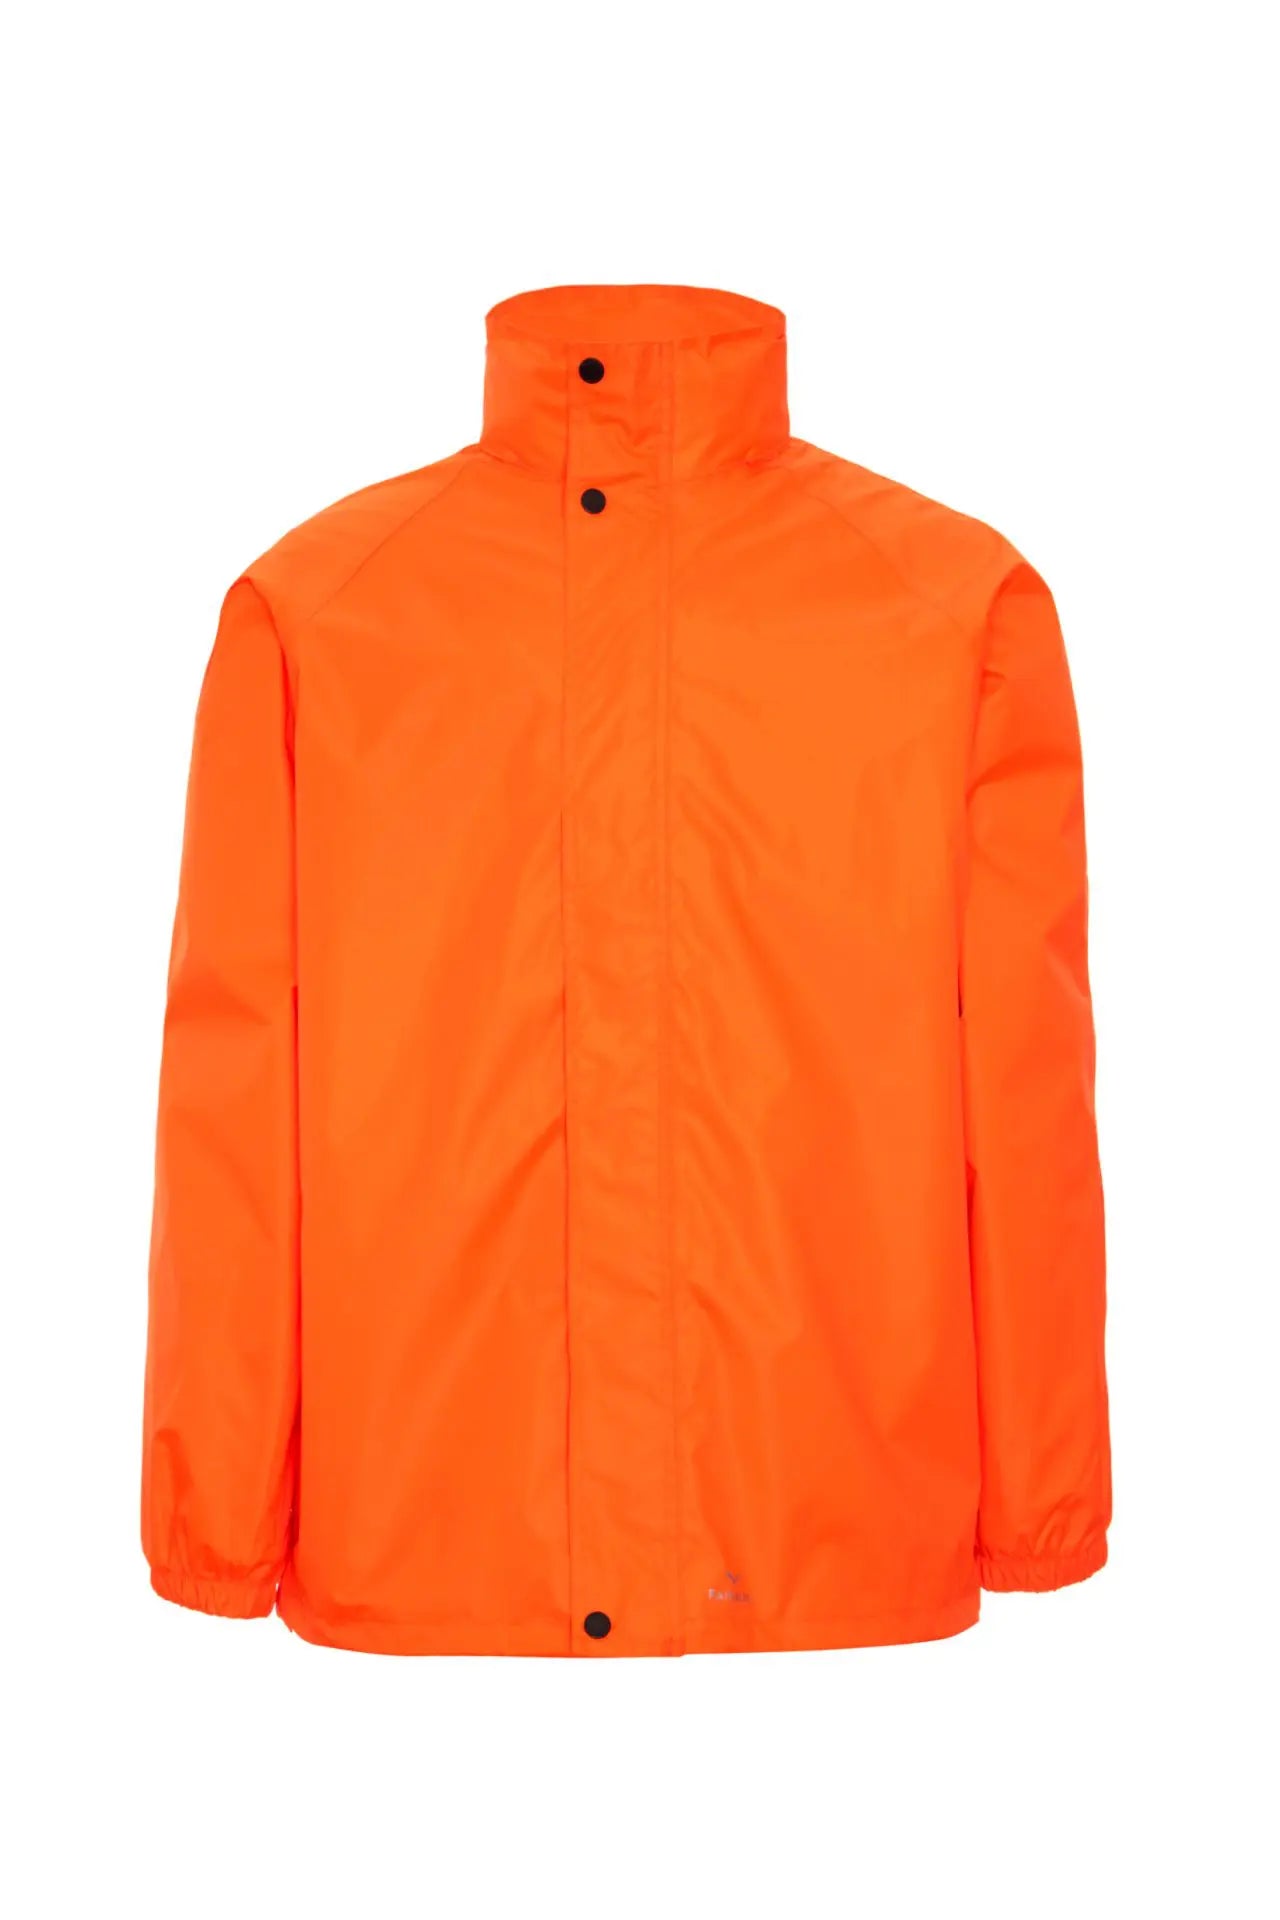 Adults STOWaway Rain Jacket 7000mm Waterproof Rating Black Small